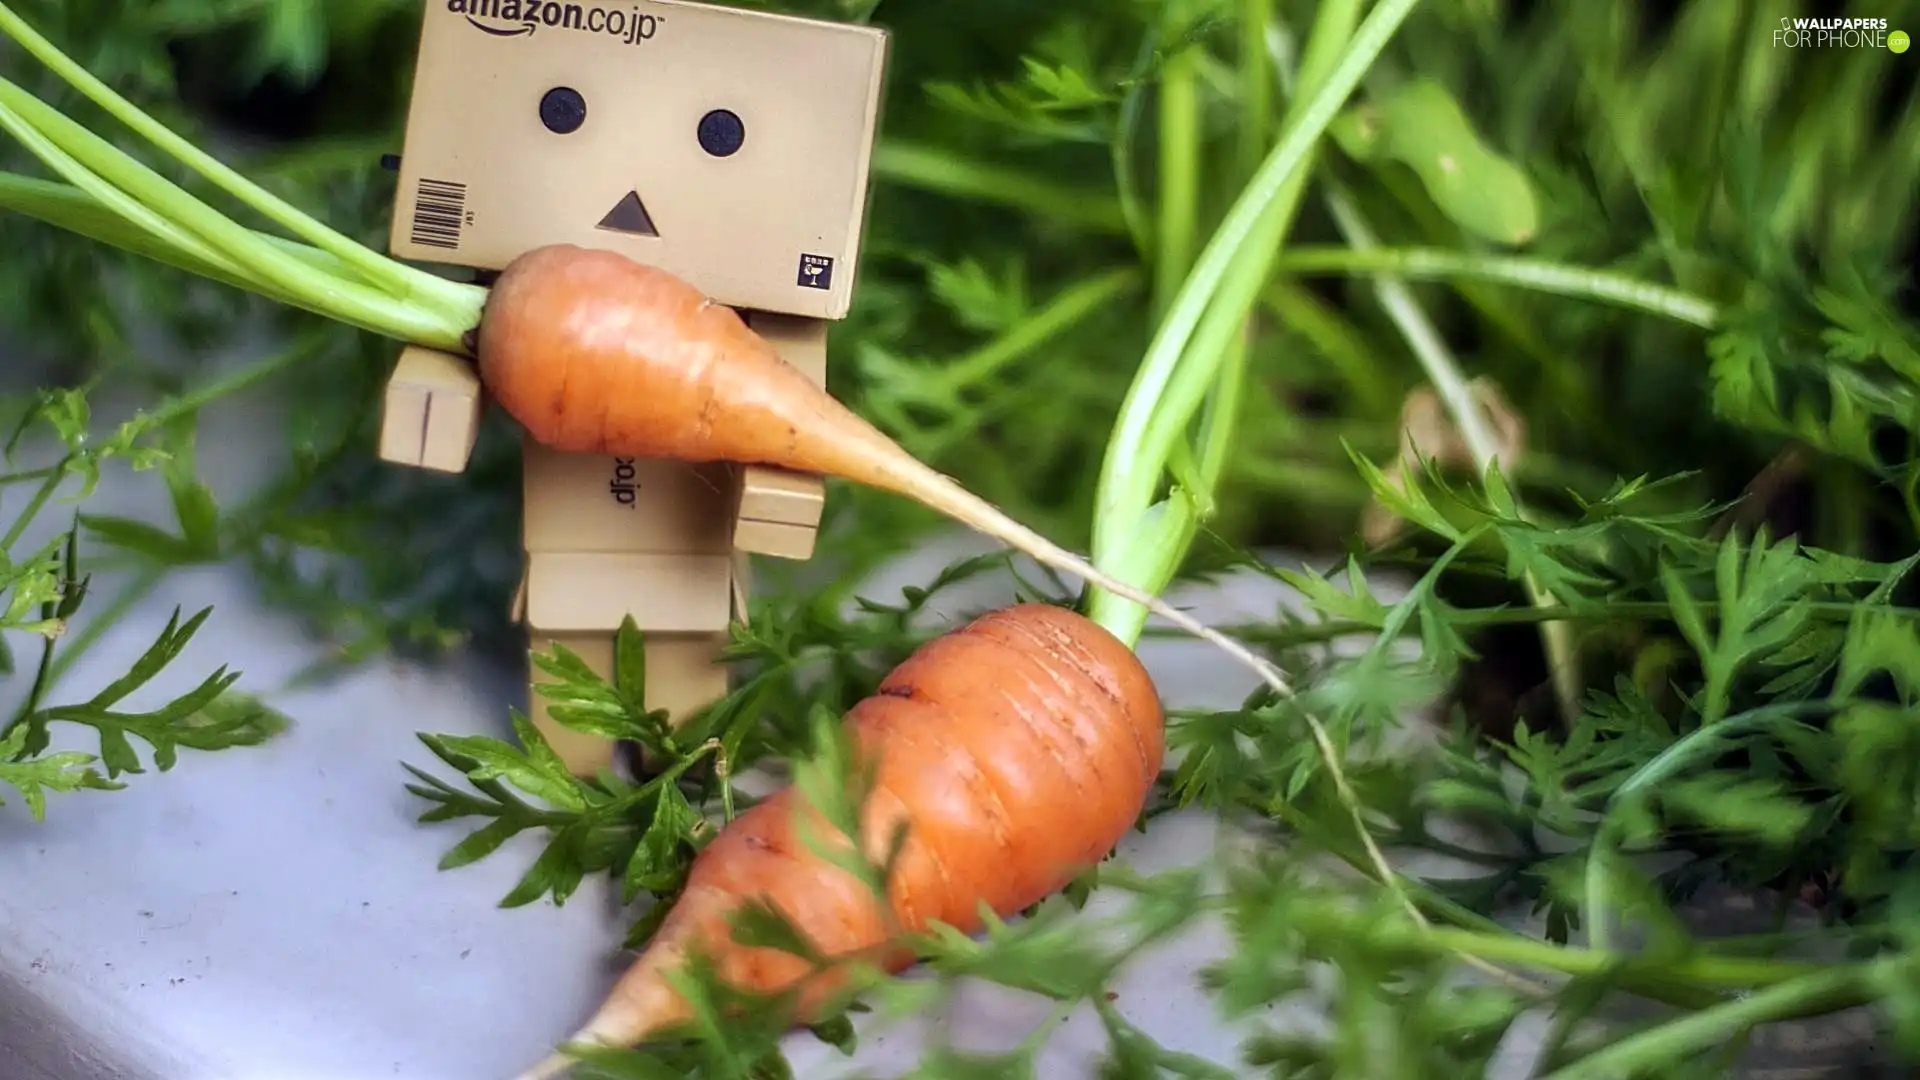 Danbo, carrots, blur, garden